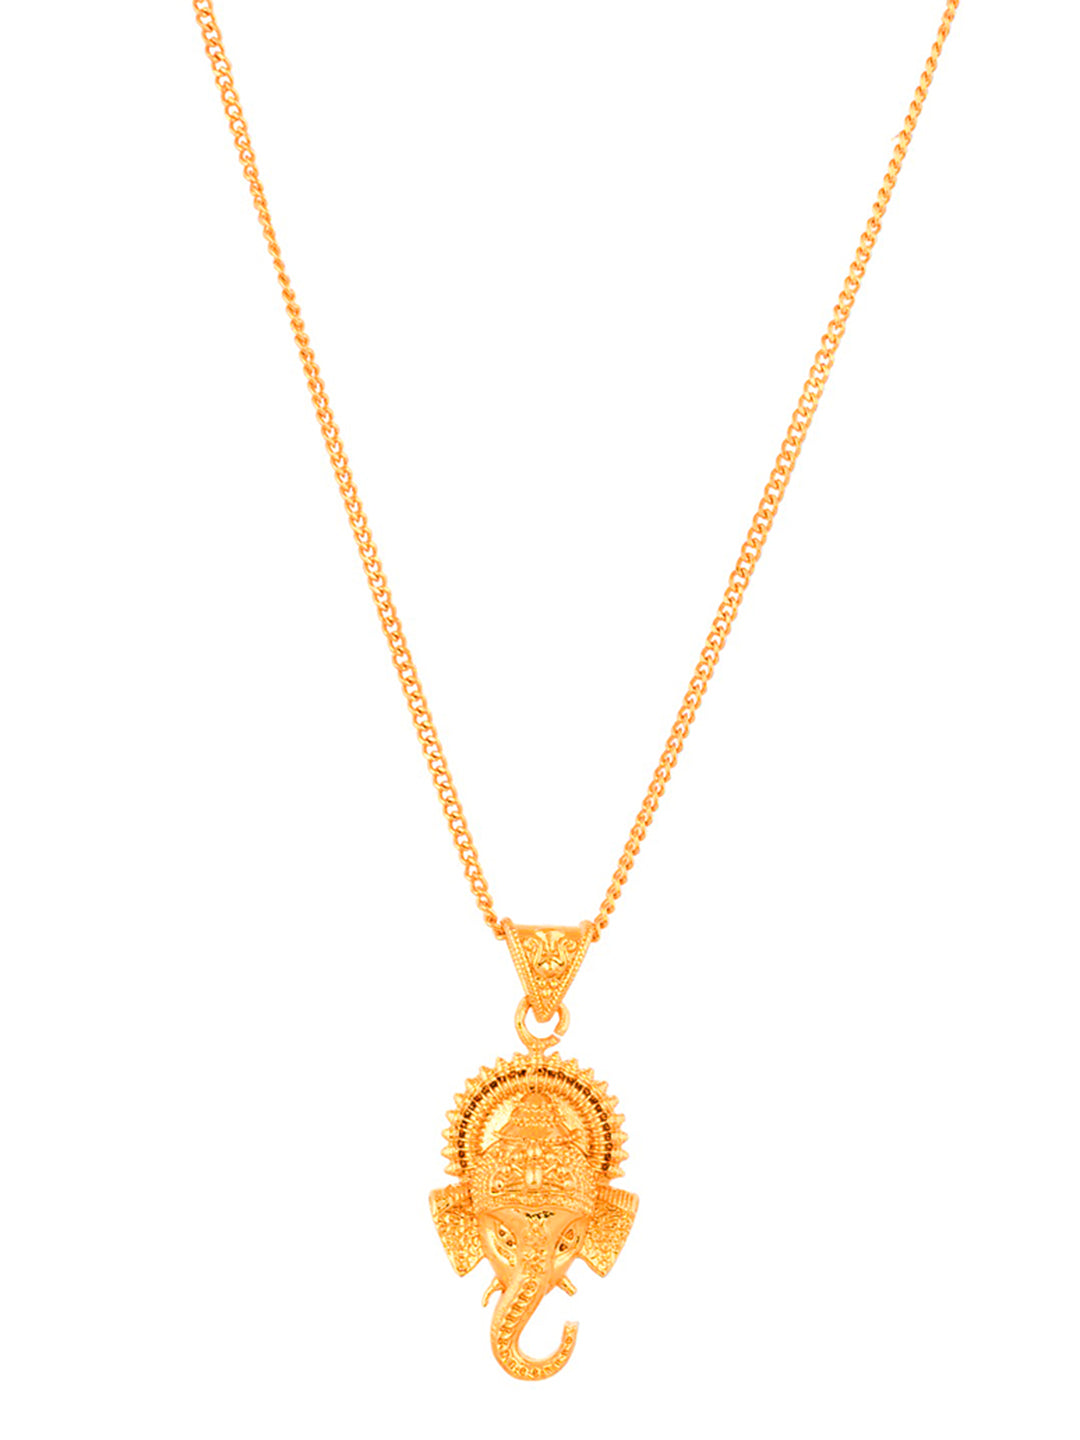 Gold tone Vighna Ganesh ji Pendant with for Women & girls